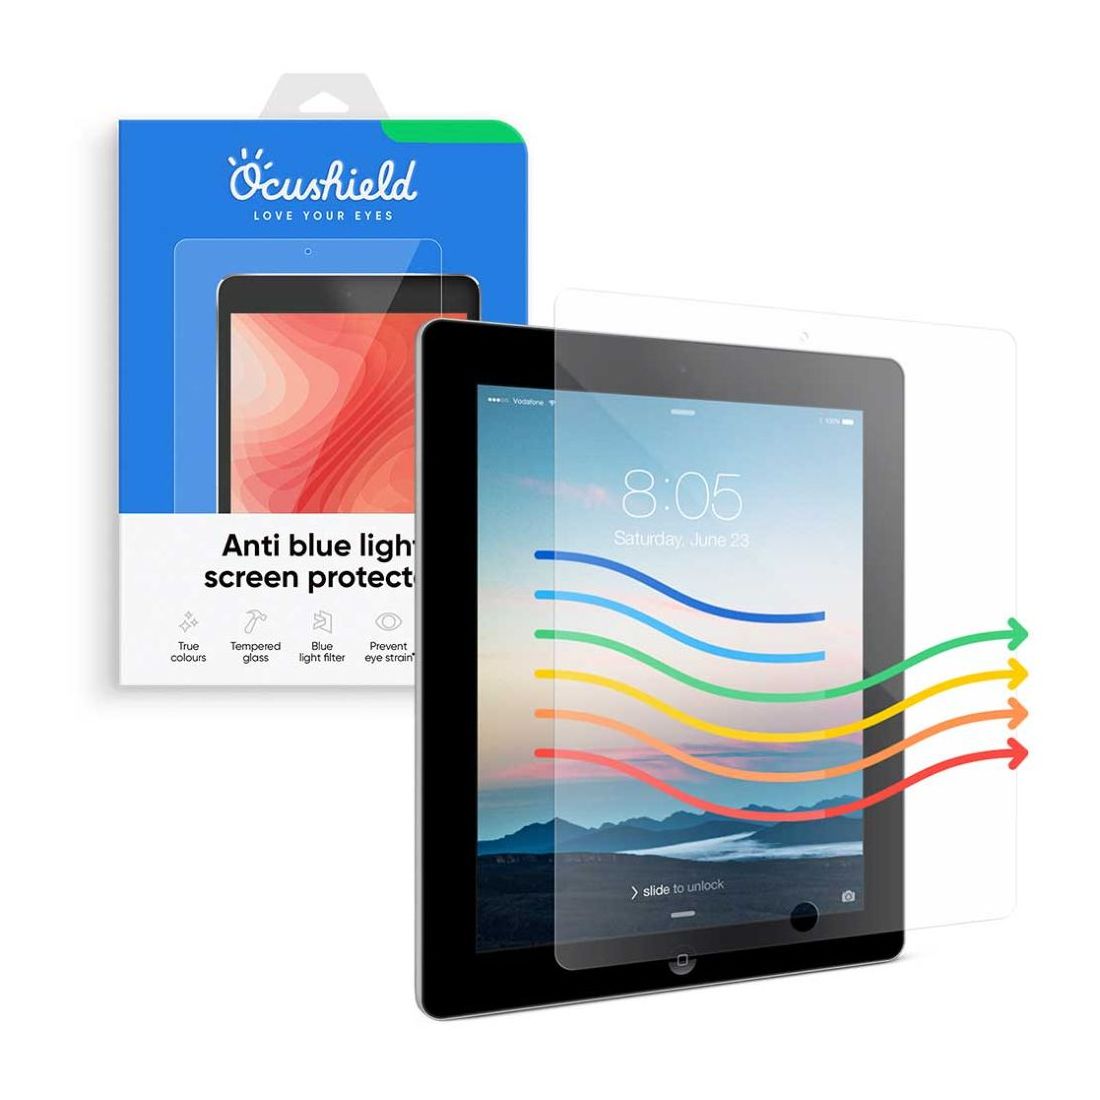 Ocushield Anti Blue Light Screen Protector for iPad Pro 10.5-Inch